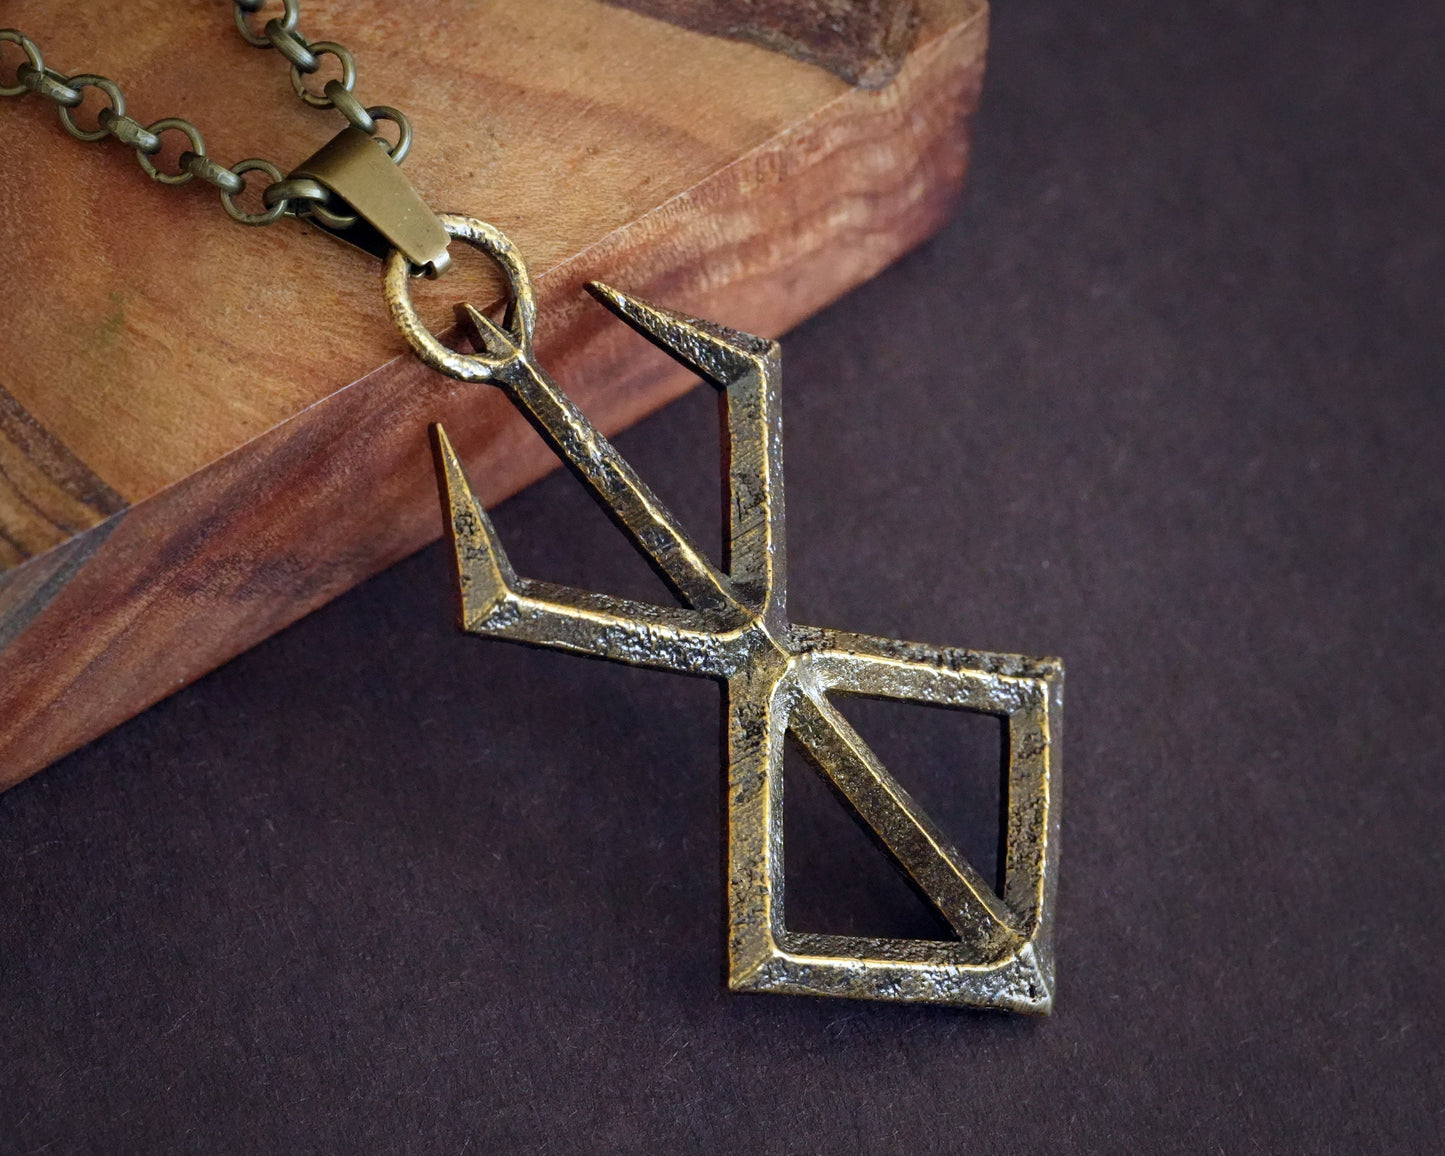 Brand of Sacrifice Rune Anime Necklace Pendant Jewelry Fantasy Cosplay Gift for Men Women - Baldur Jewelry